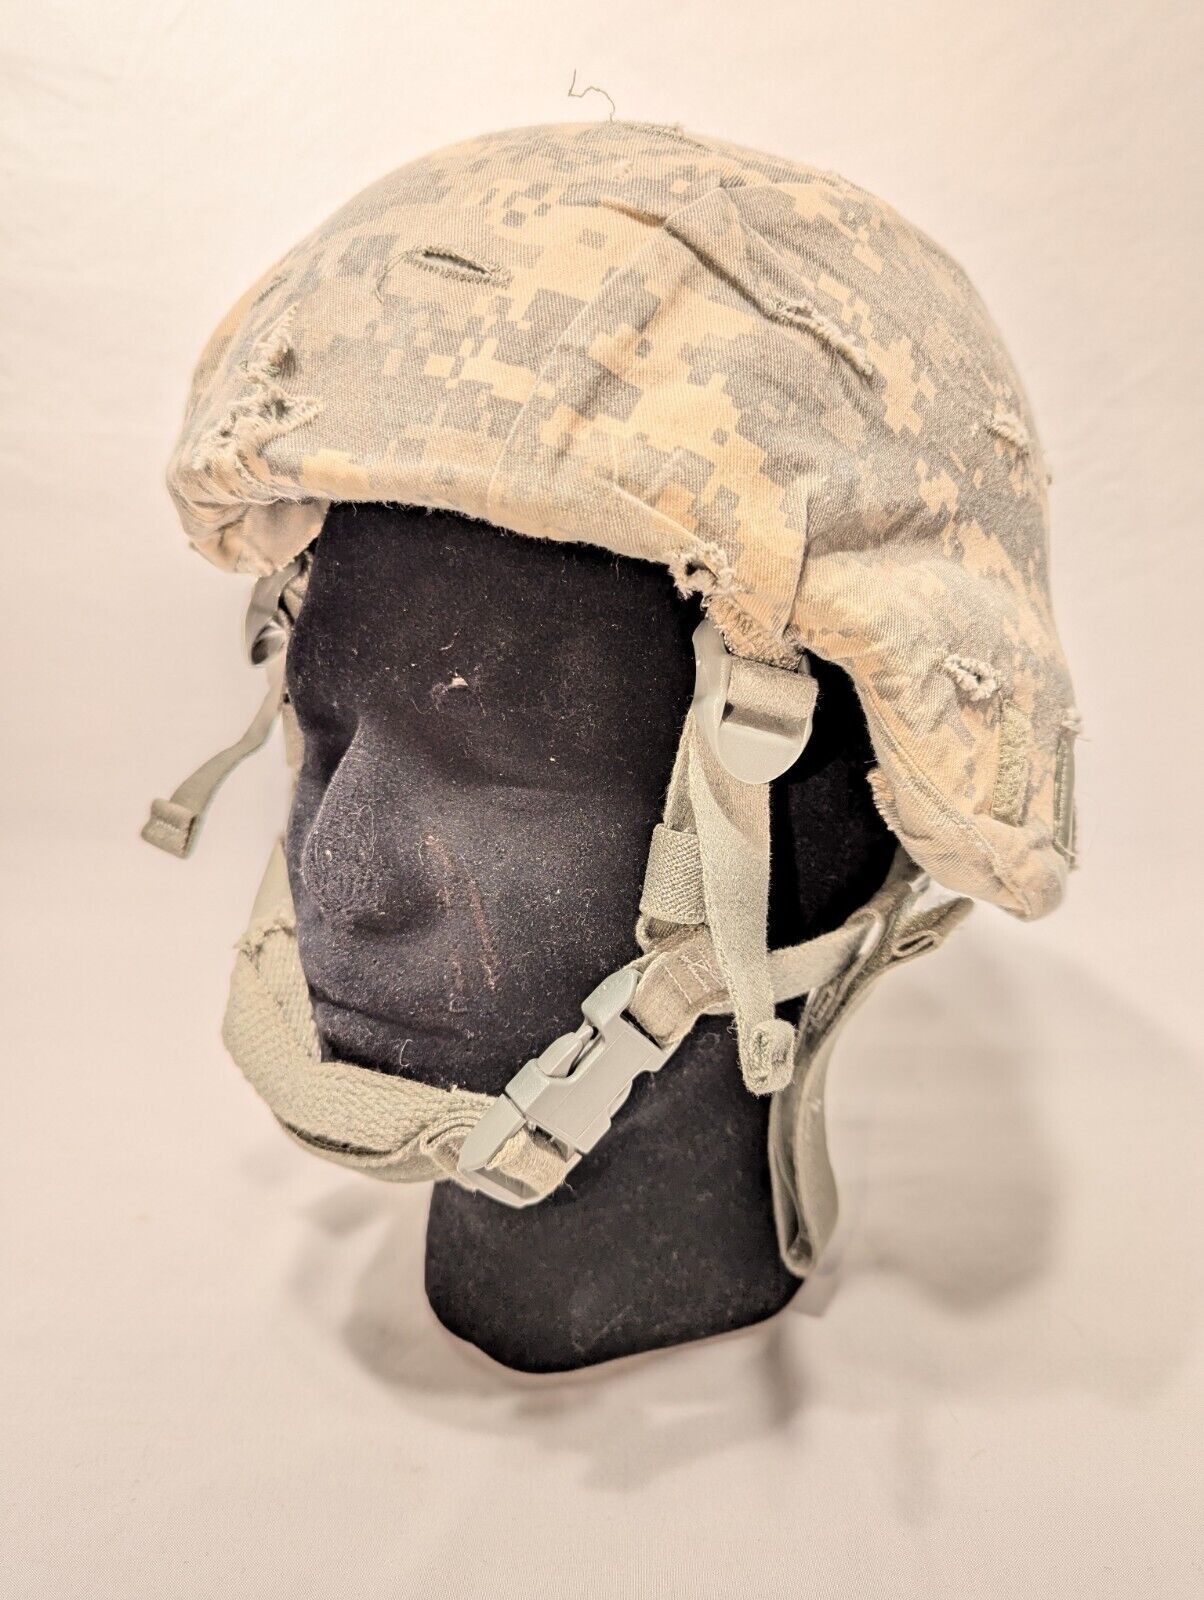 GENTEX Warrior Helmet by SDS Style 2415 Medium USAF Combat used W/Kevlar 